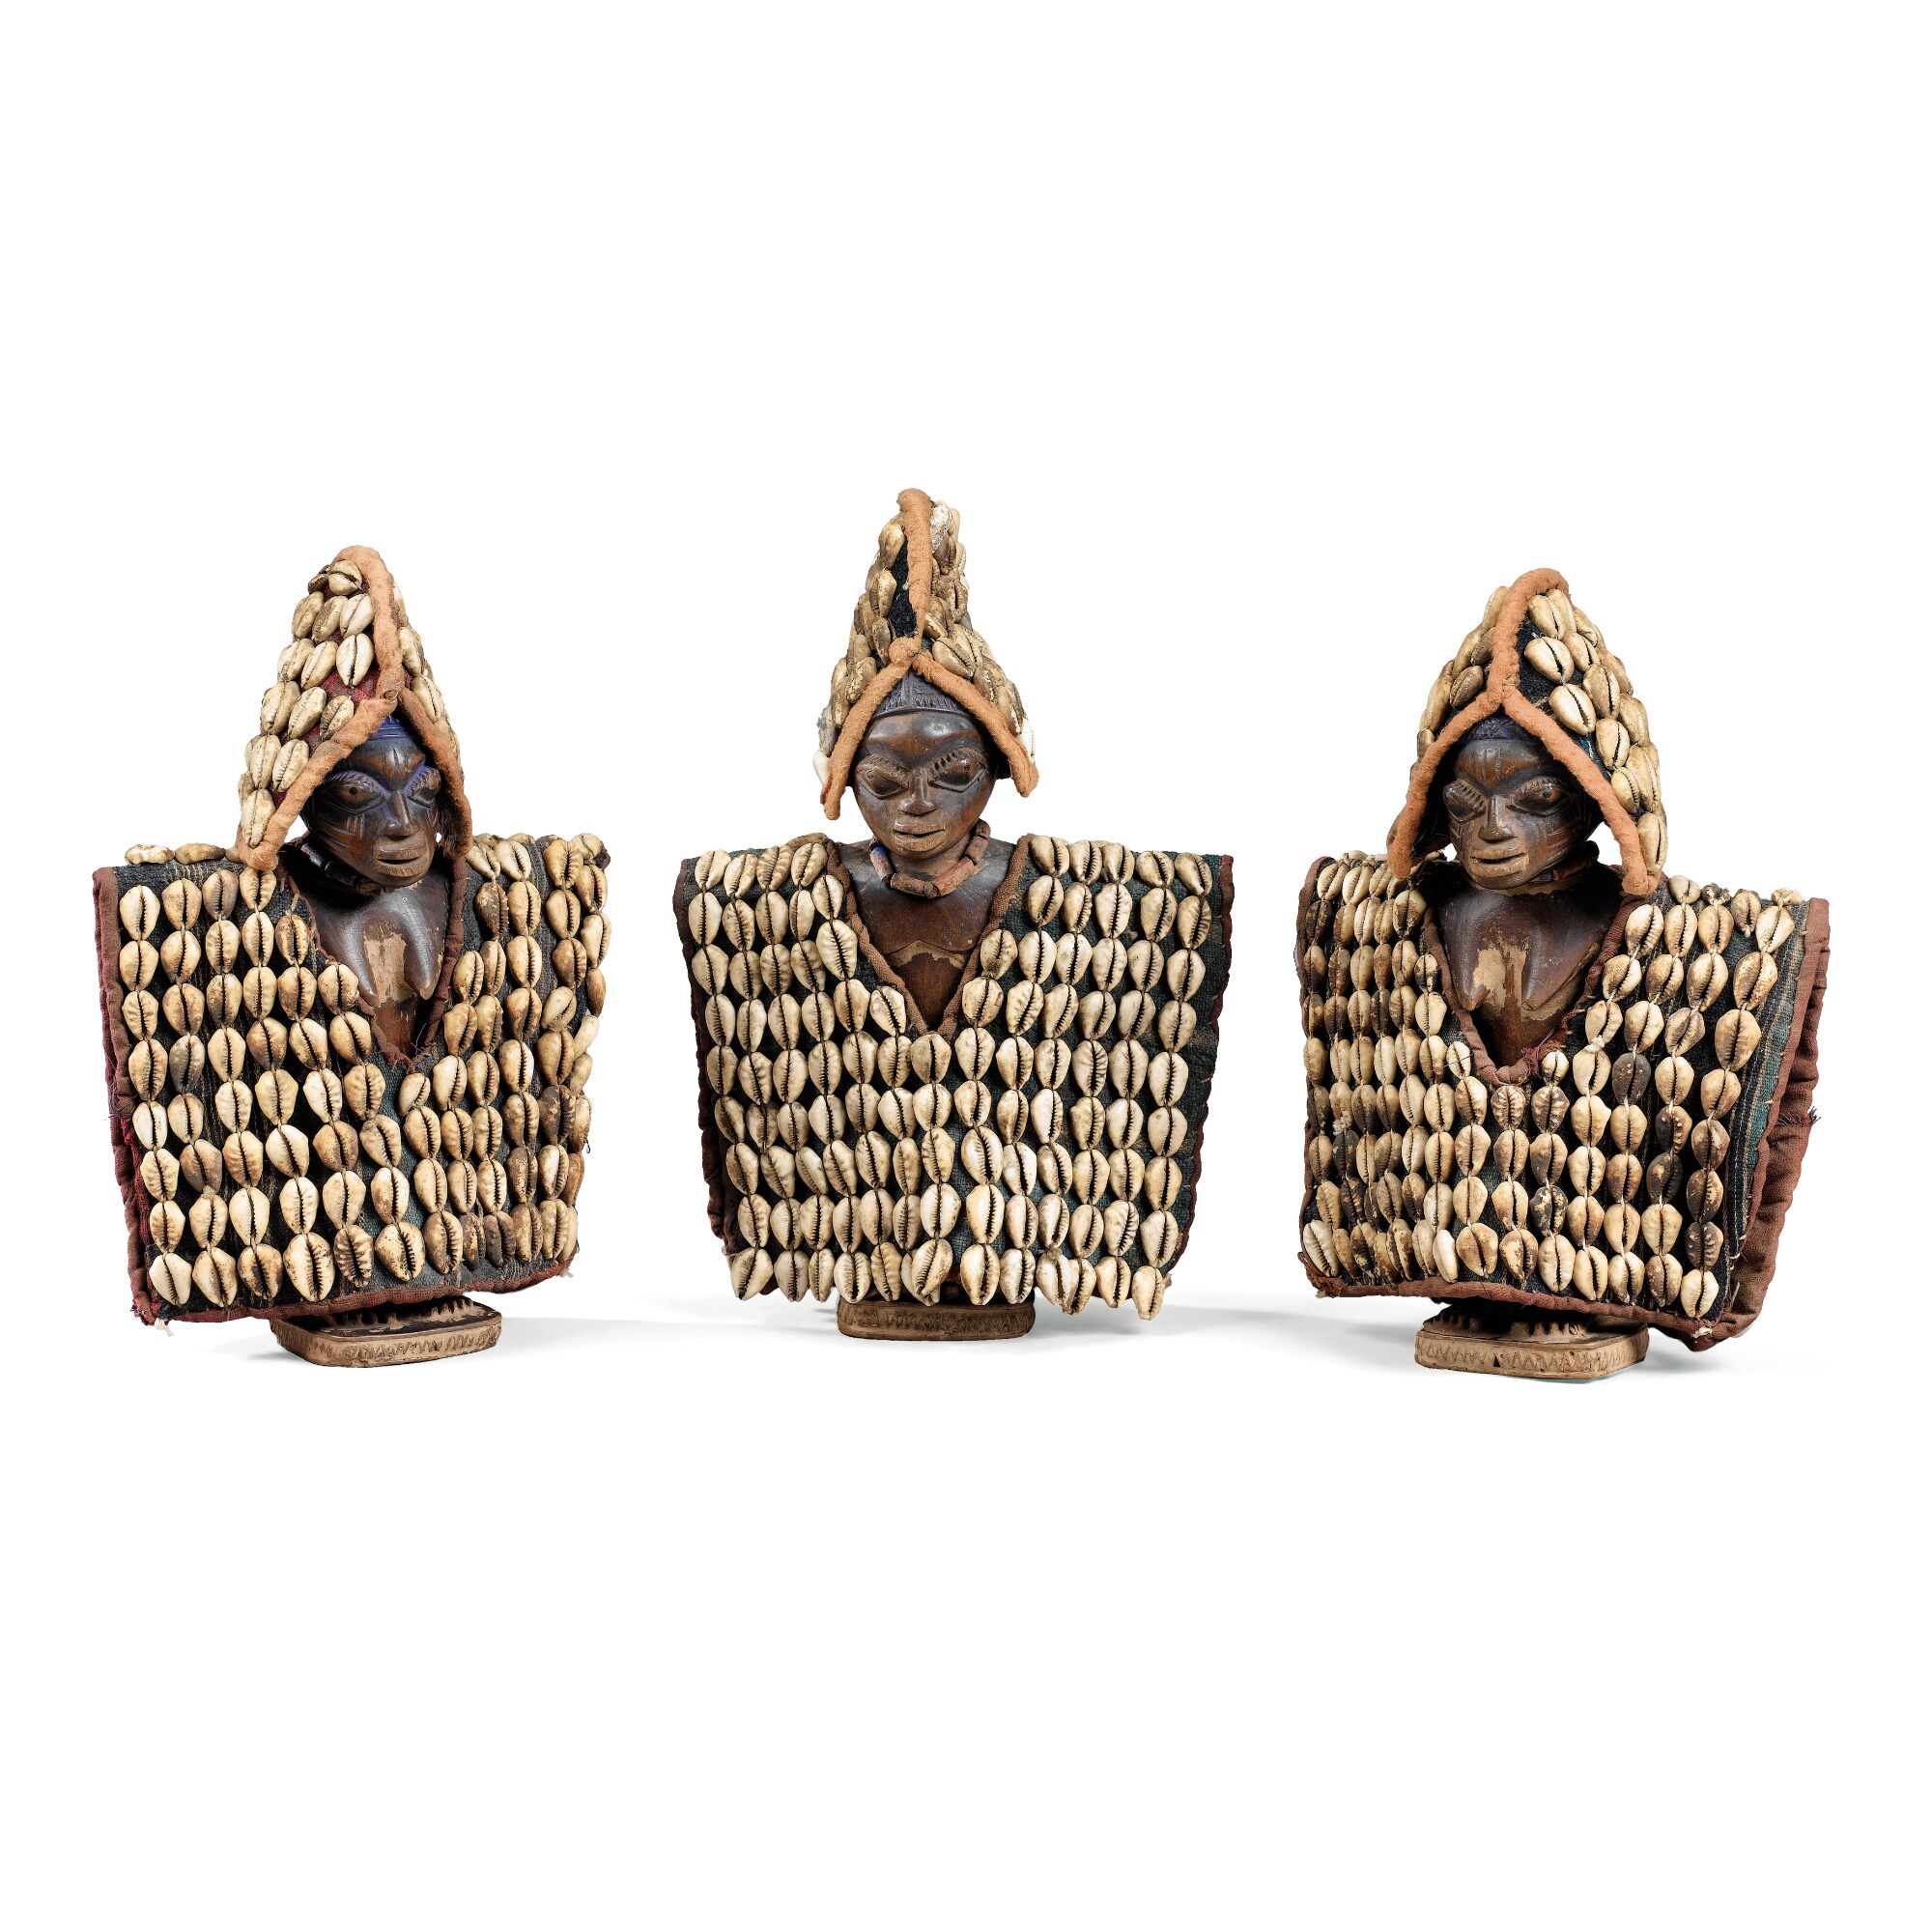 Statuettes of triplets, Yoruba, Nigeria YORUBA TRIPLET FIGURES, NIGERIA